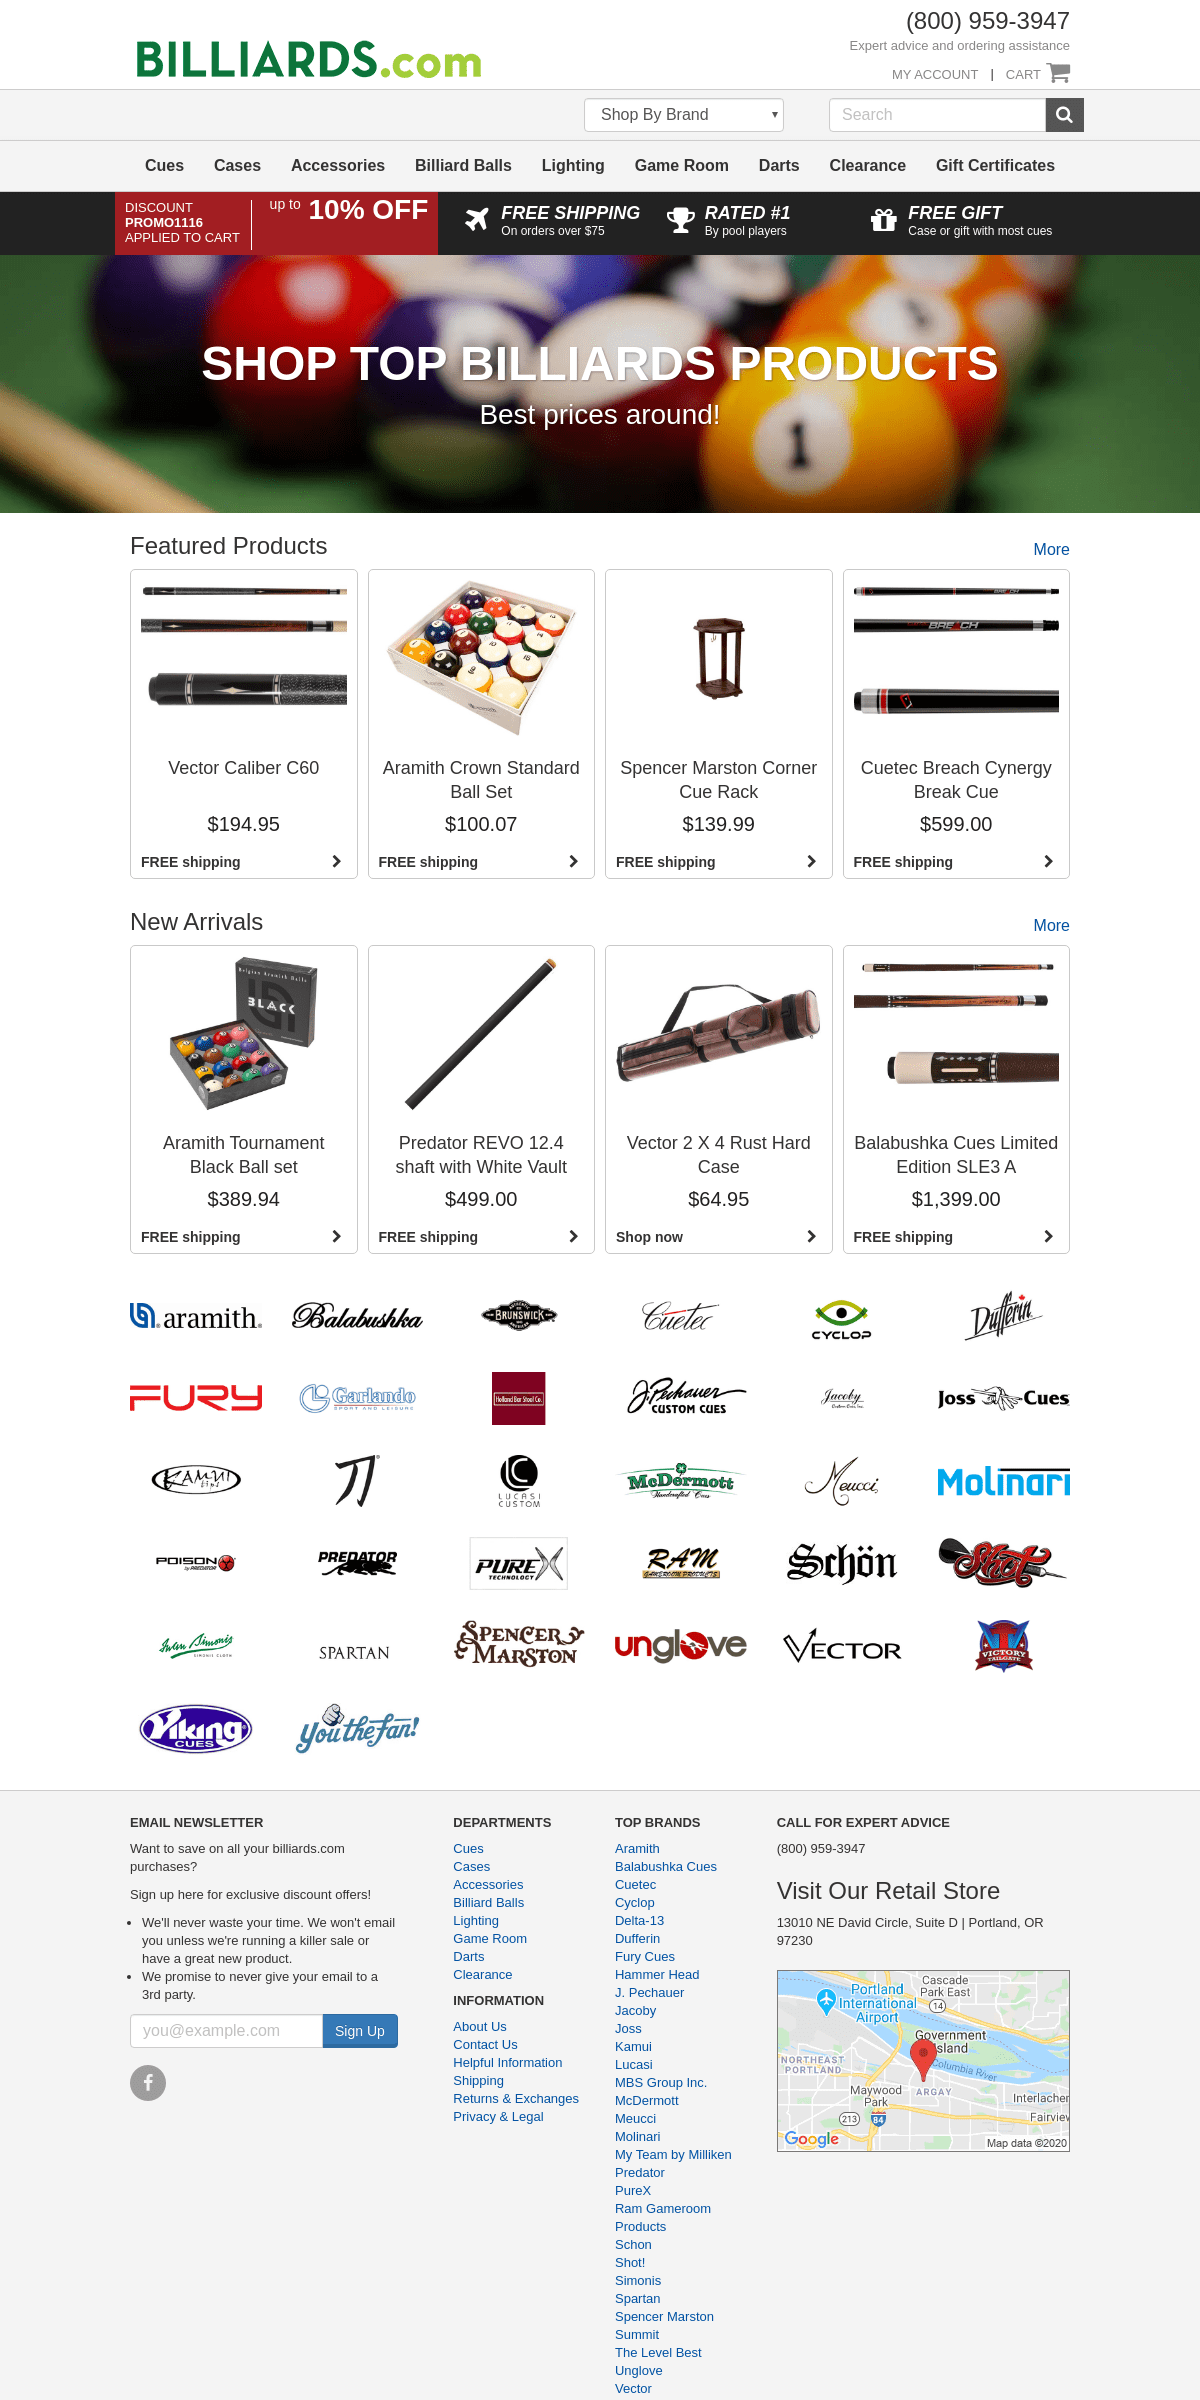 A complete backup of billiards.com